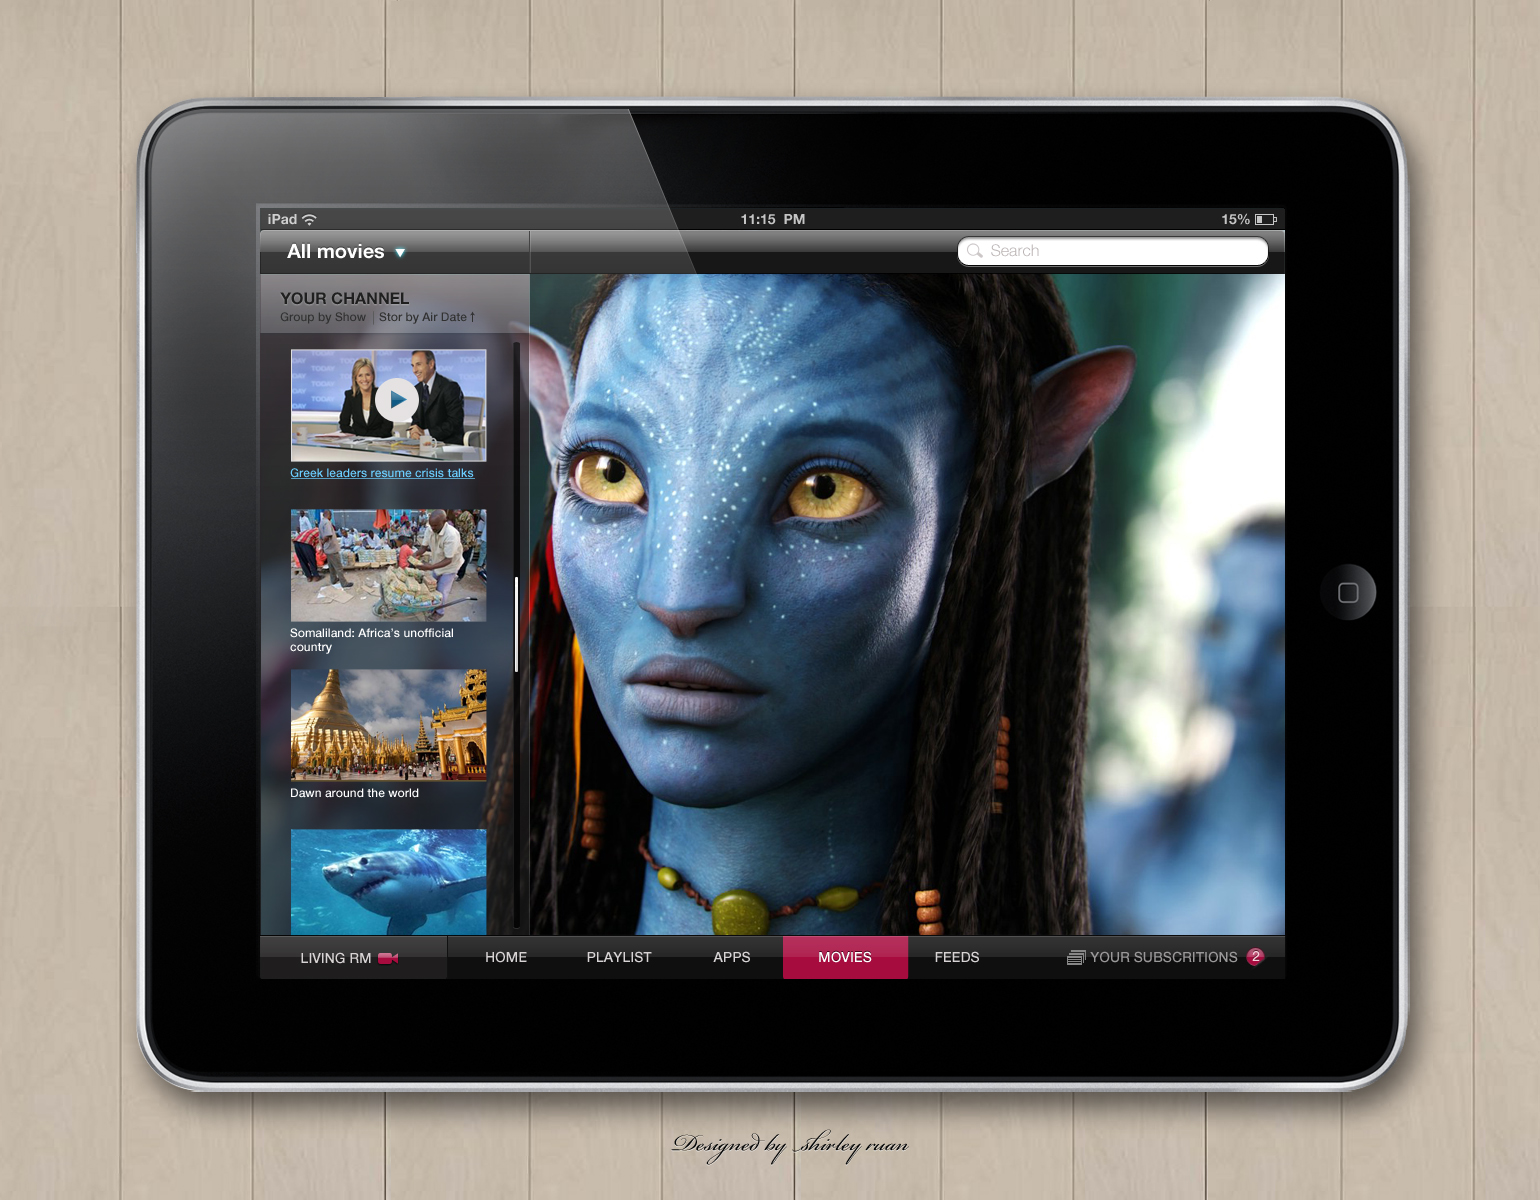 ipad音乐播放器排行_qq音乐播放器官方下载iPad版 QQ音乐HD for iPad V4.5 官方